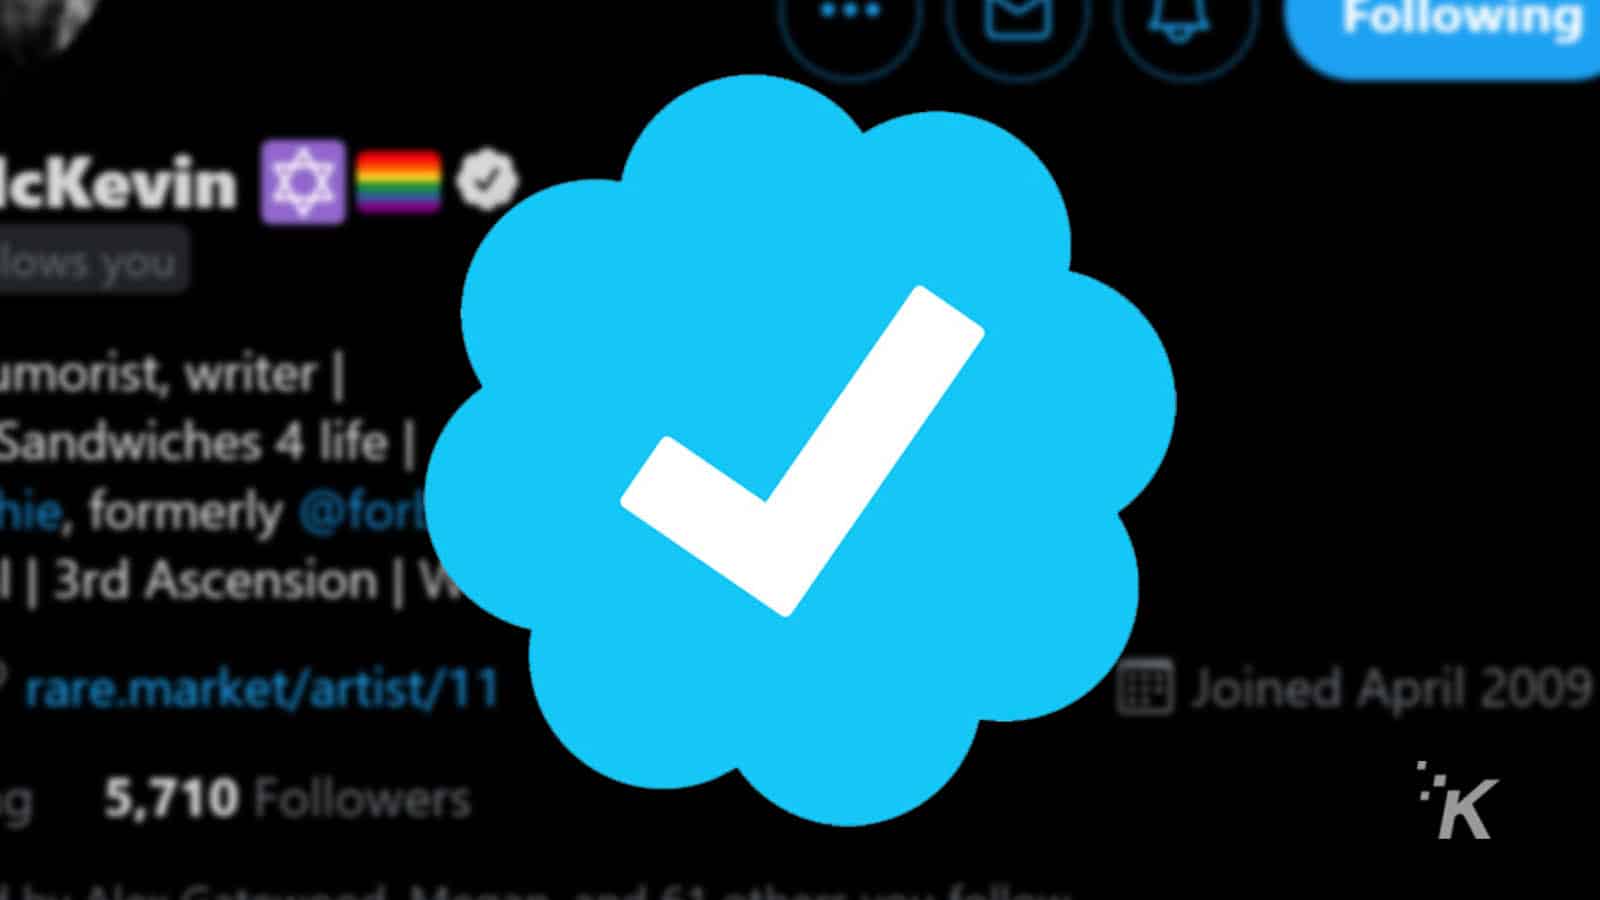 twitter verification mark